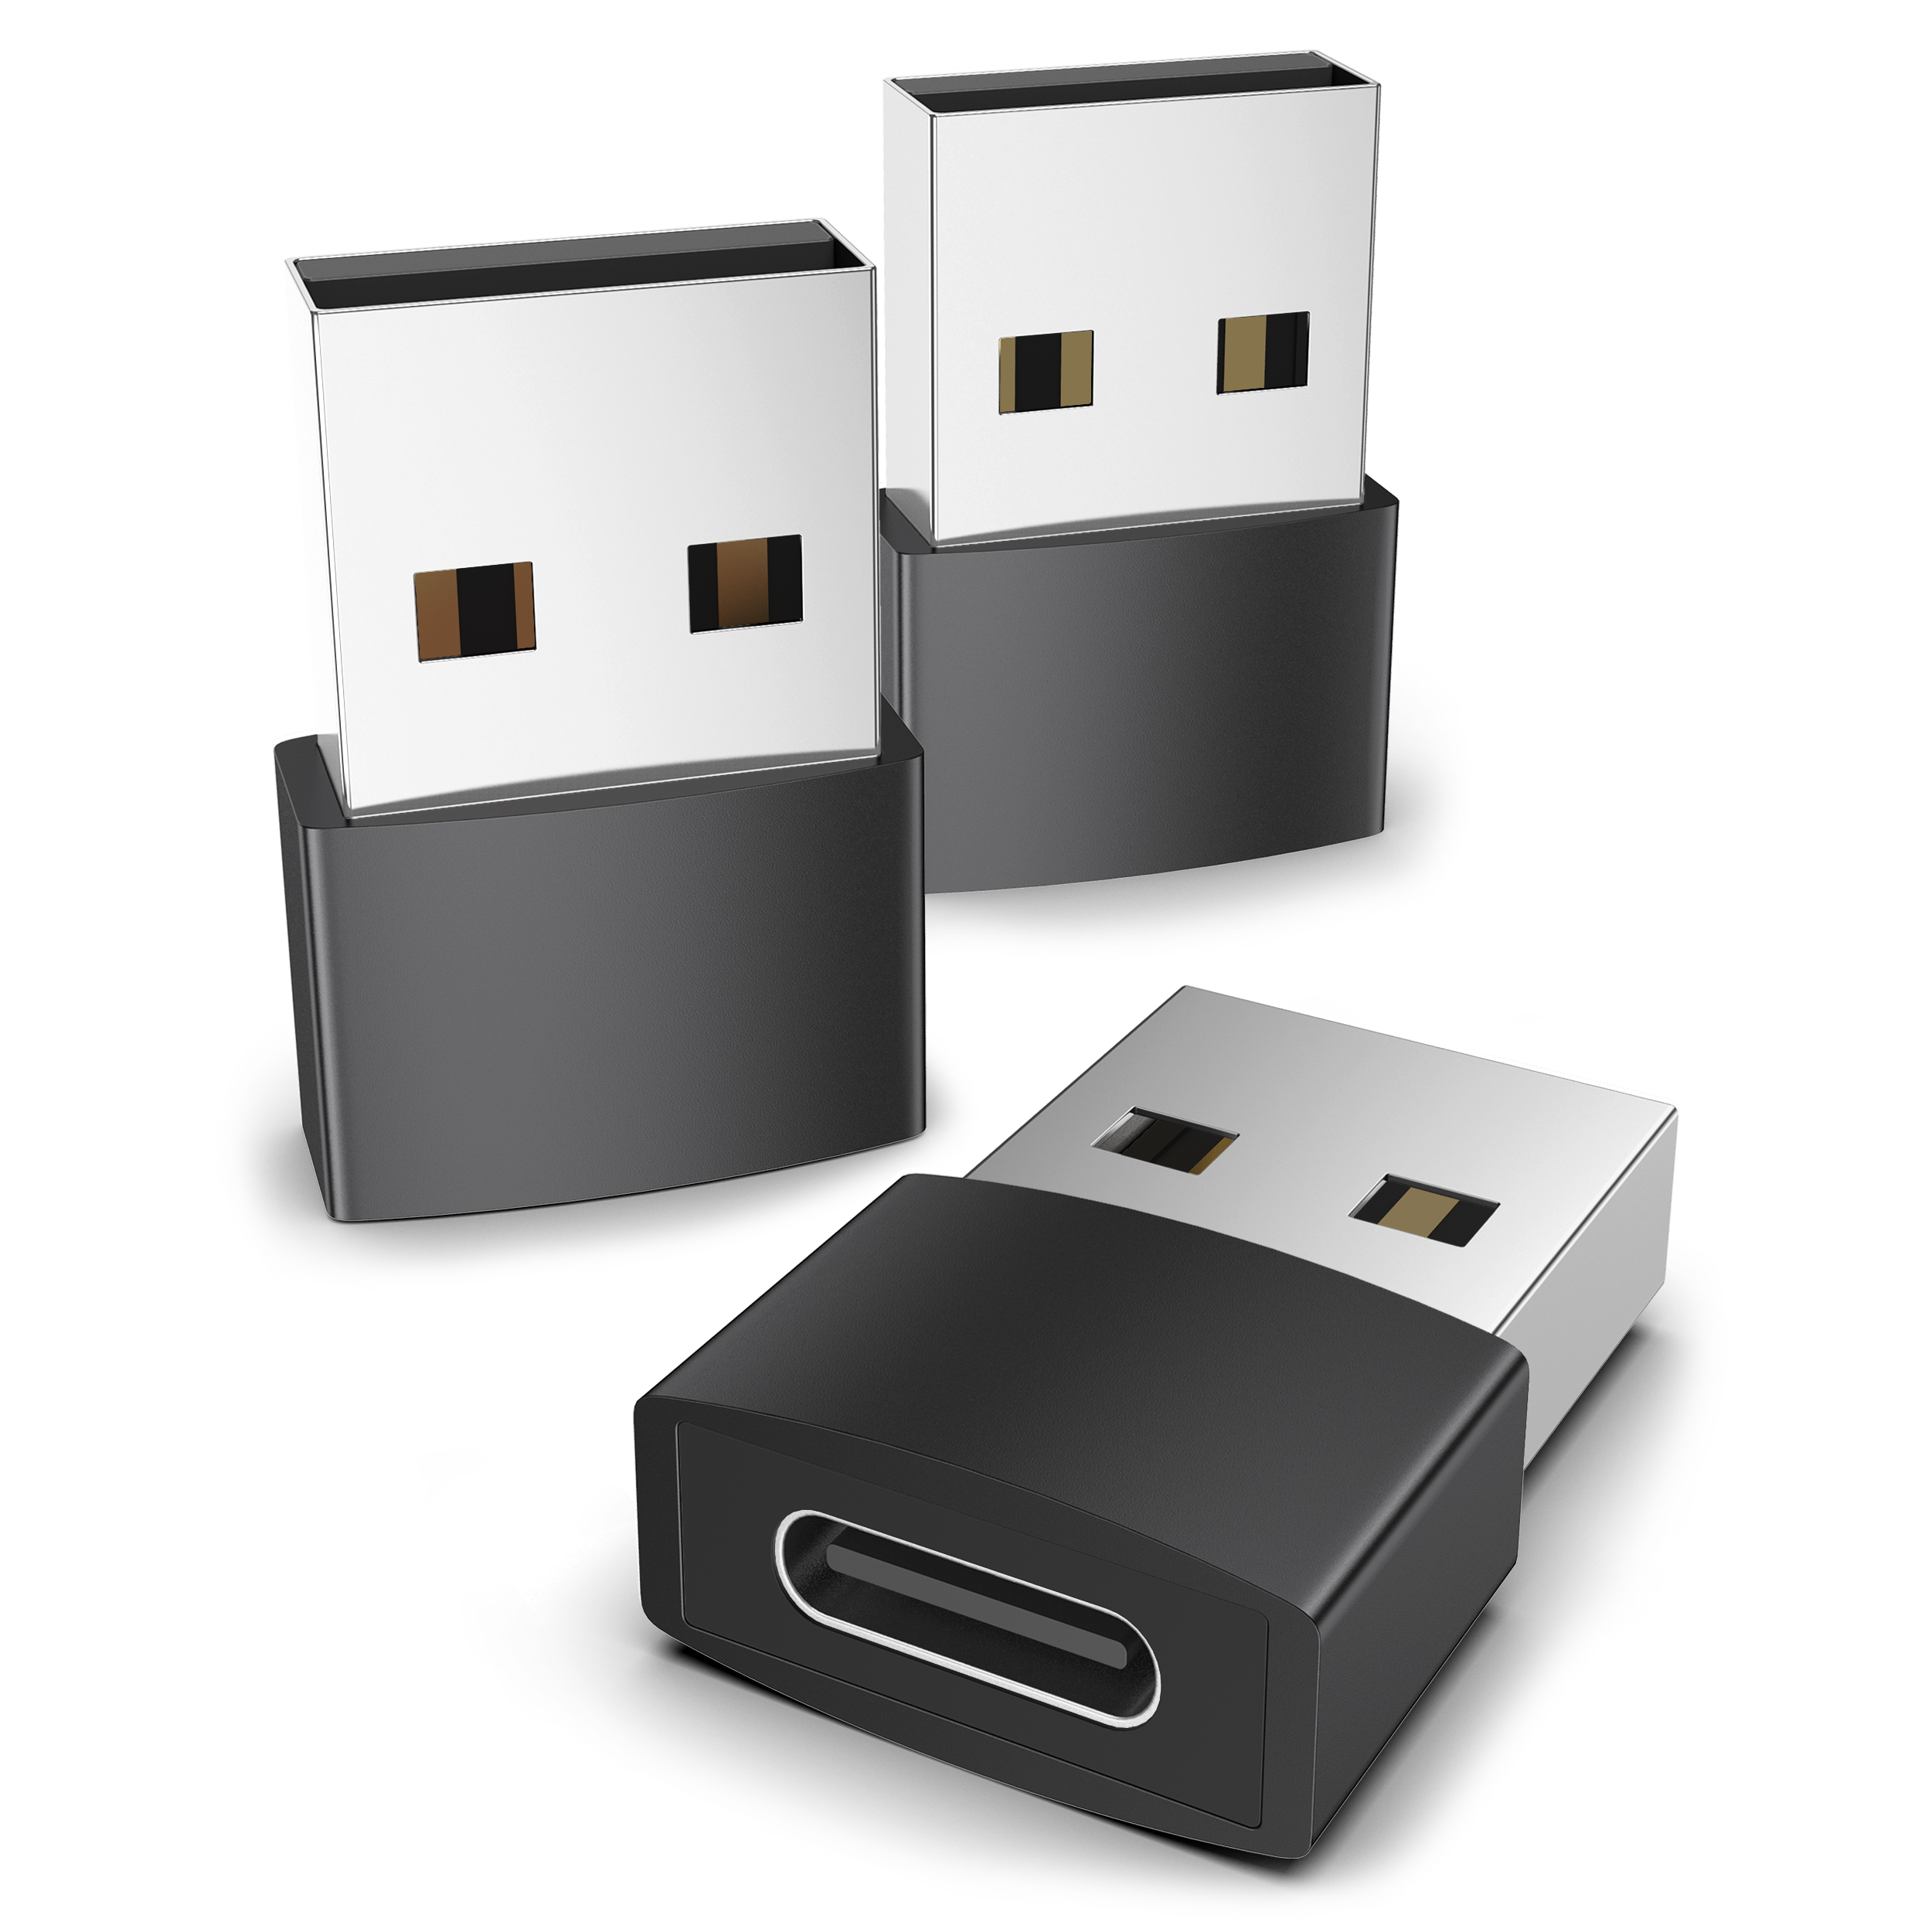 USB 2.0 to USB C Adapter